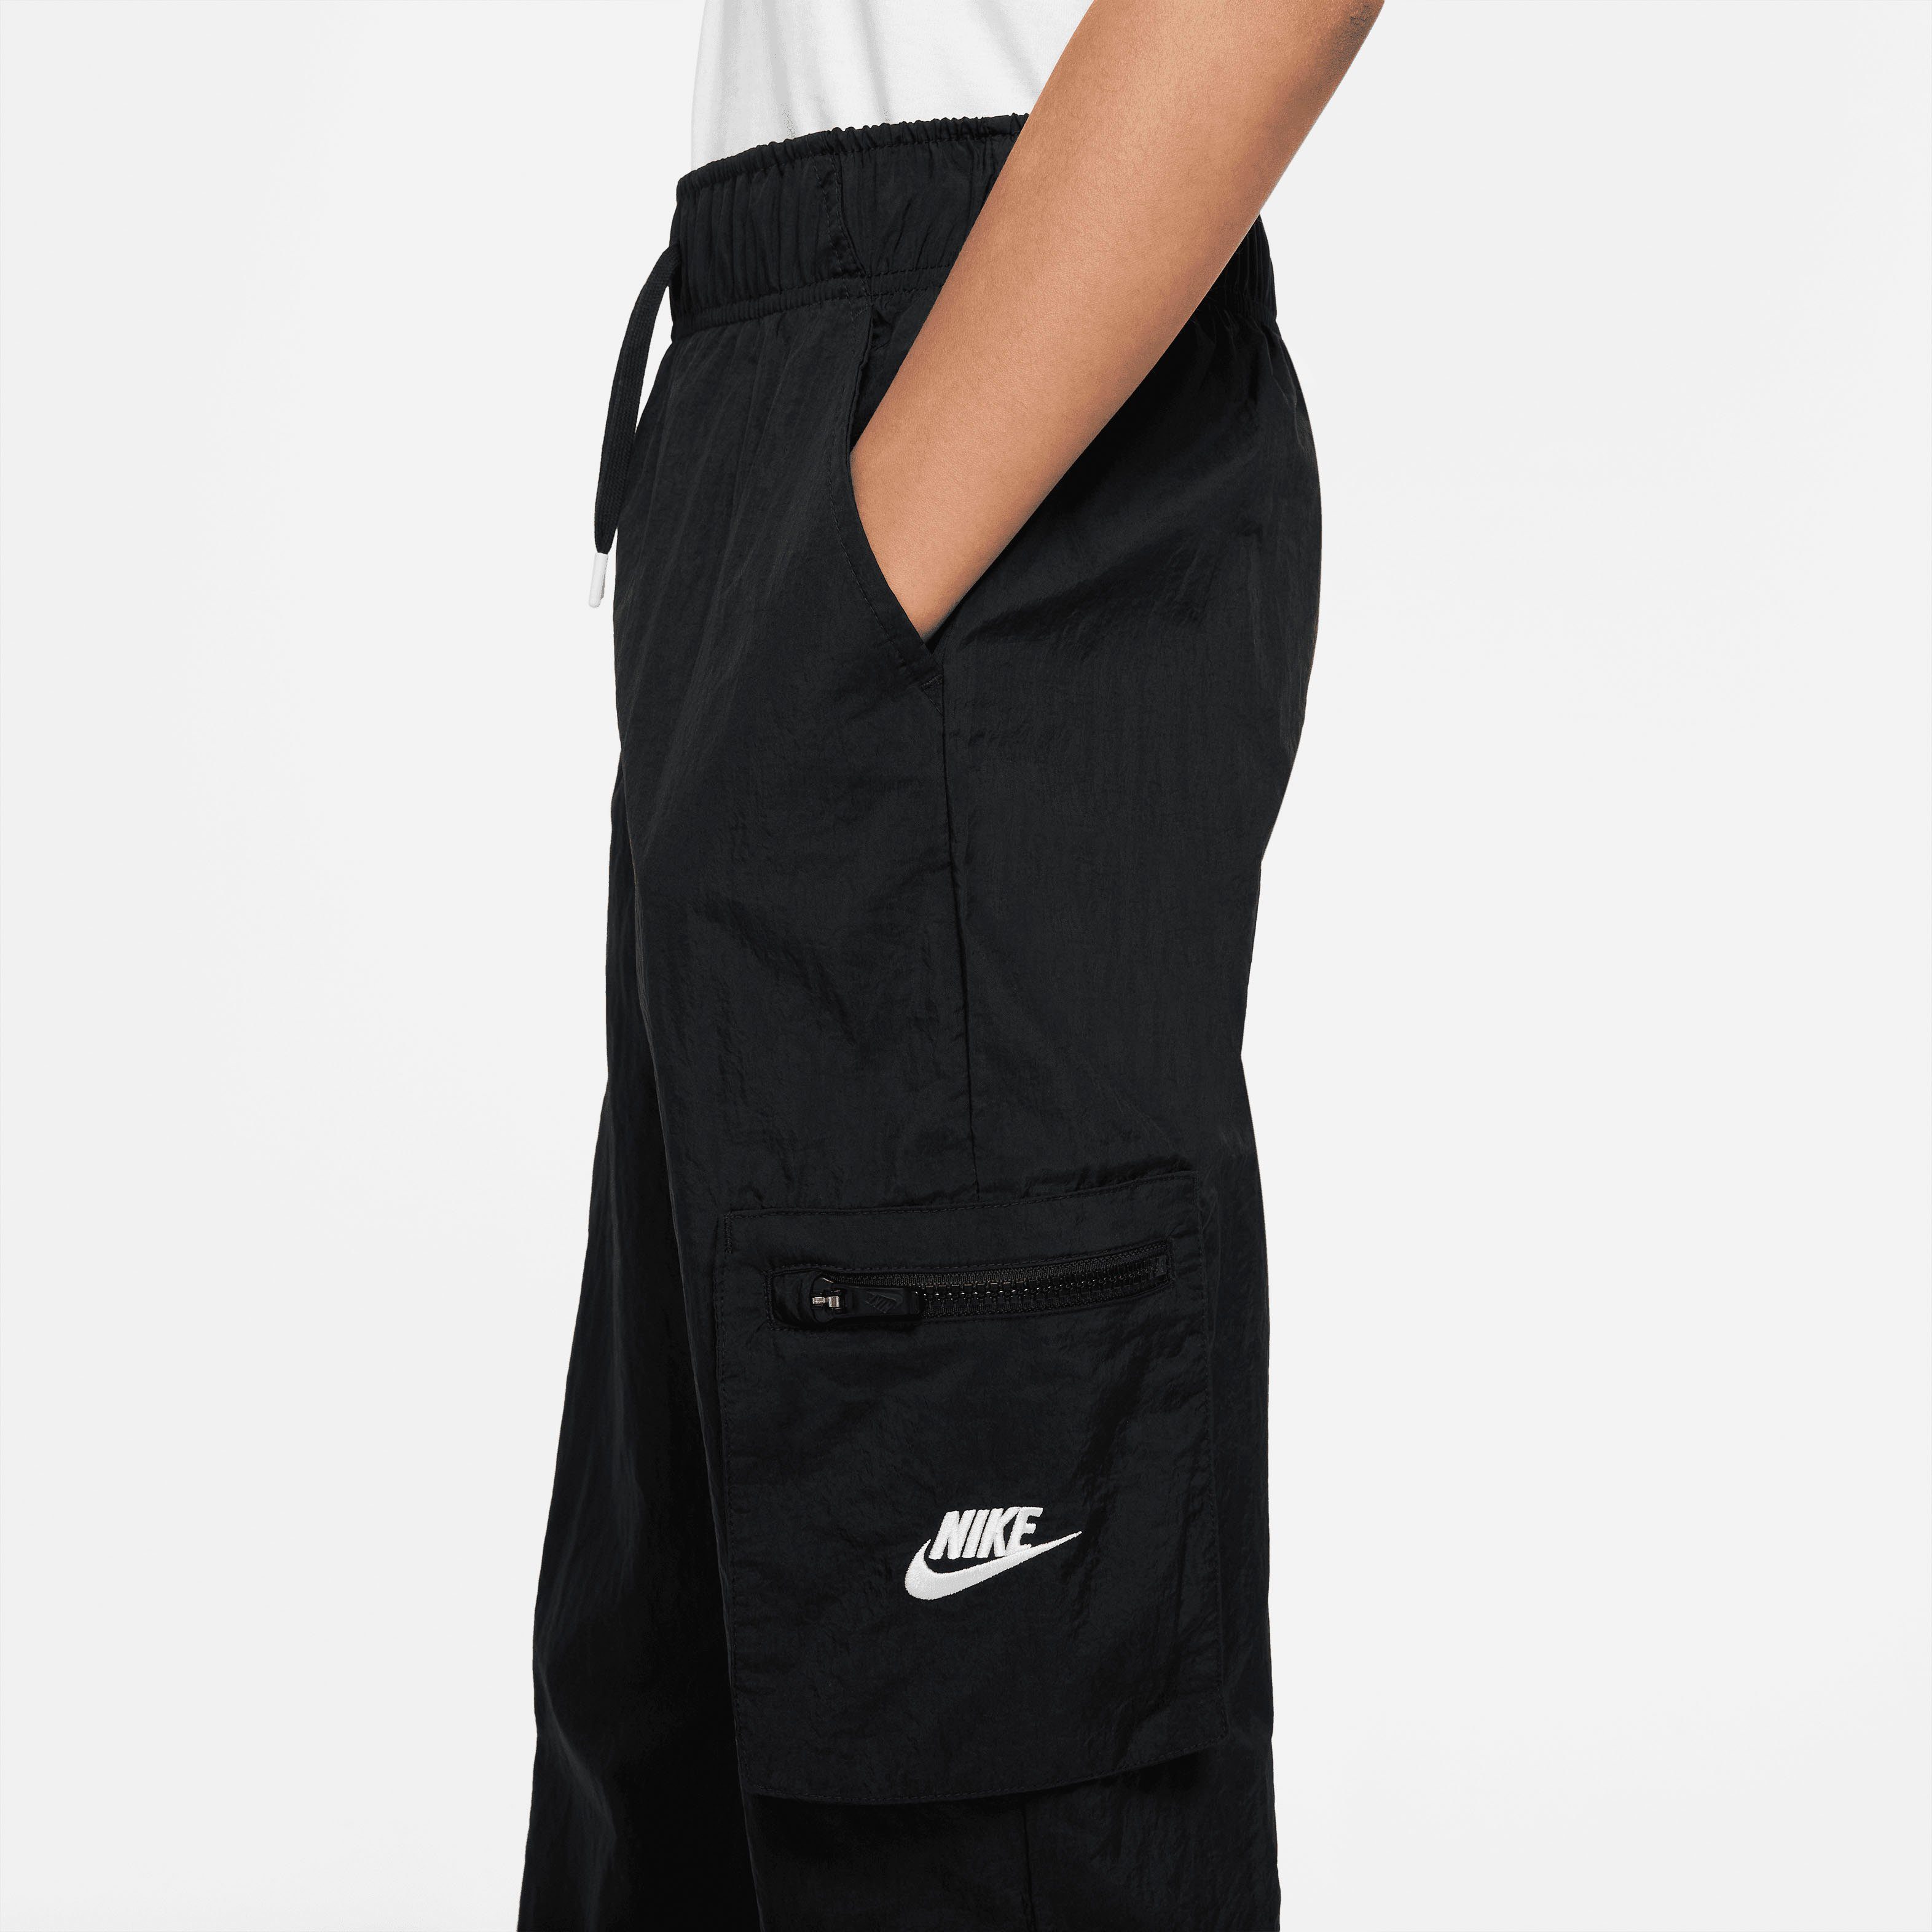 Kids' Big Nike Cargo BLACK/WHITE Sportswear Sporthose (Girls) Woven Pants